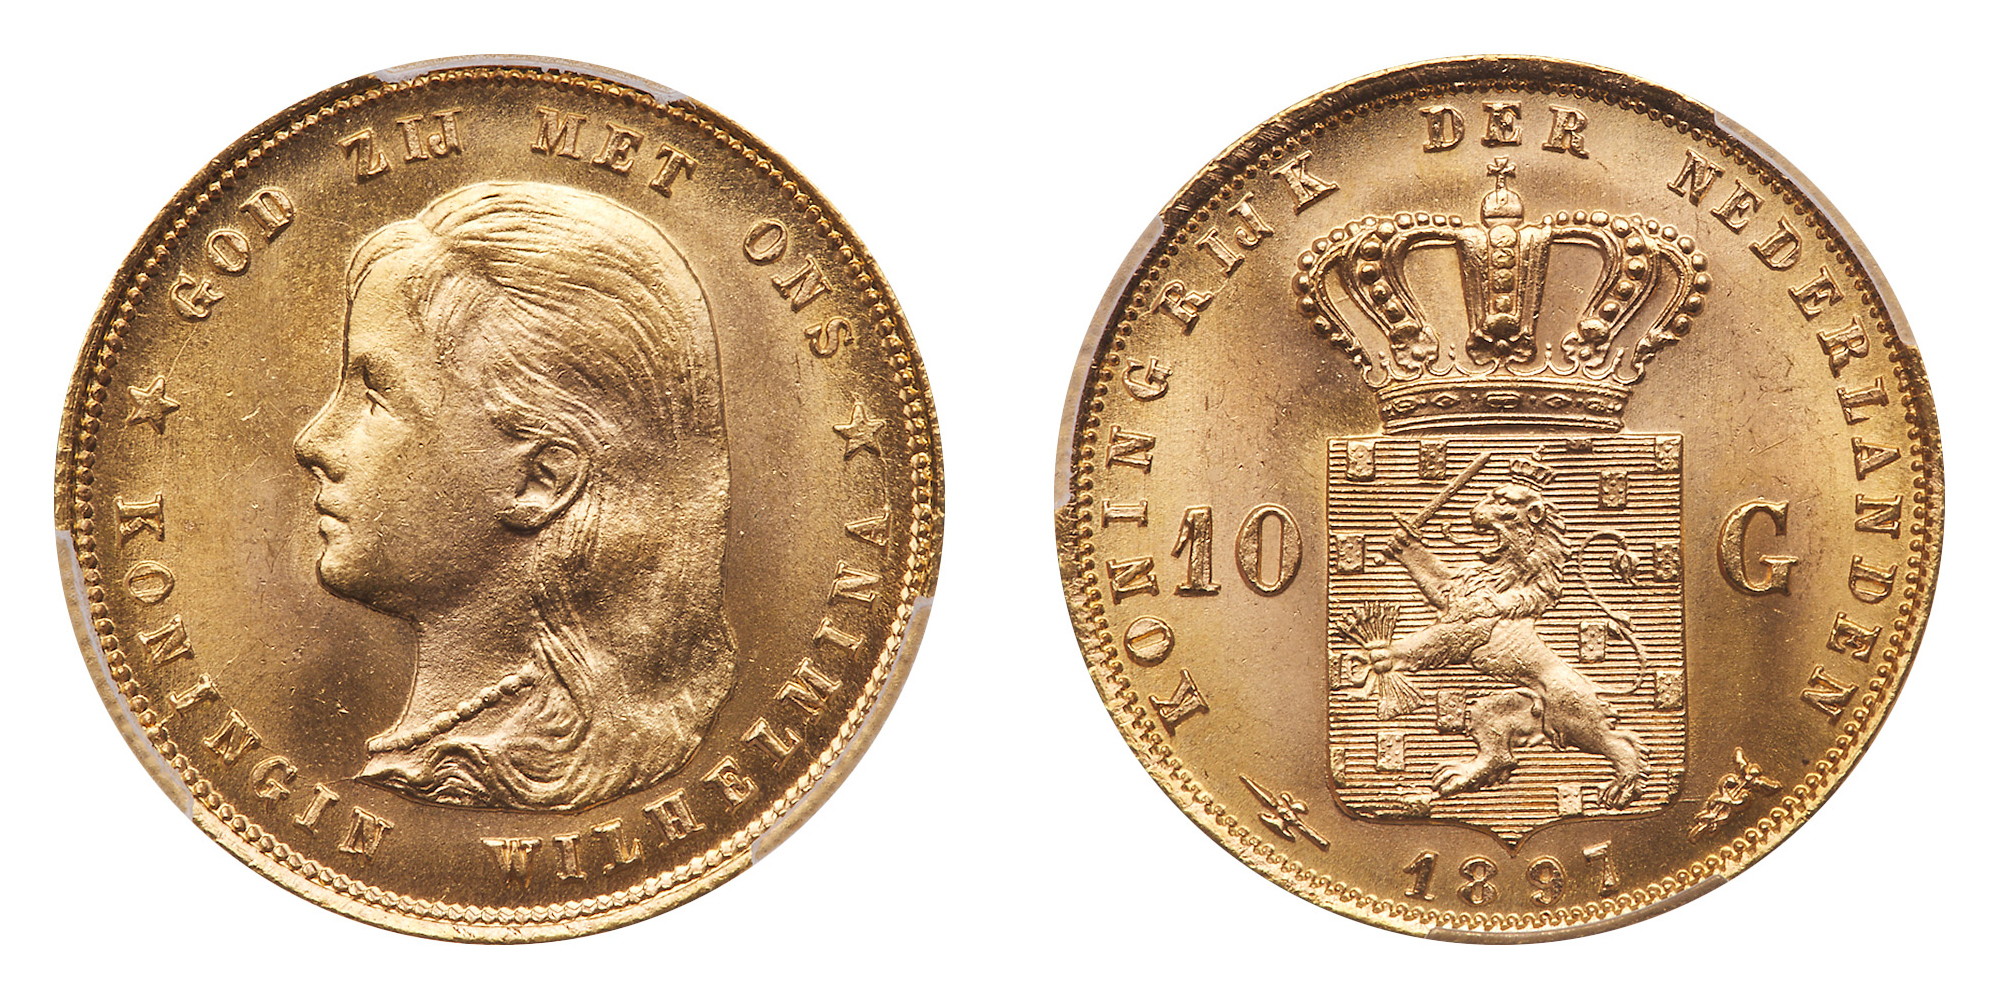 Netherlands. 10 Gulden, 1897. PCGS MS66